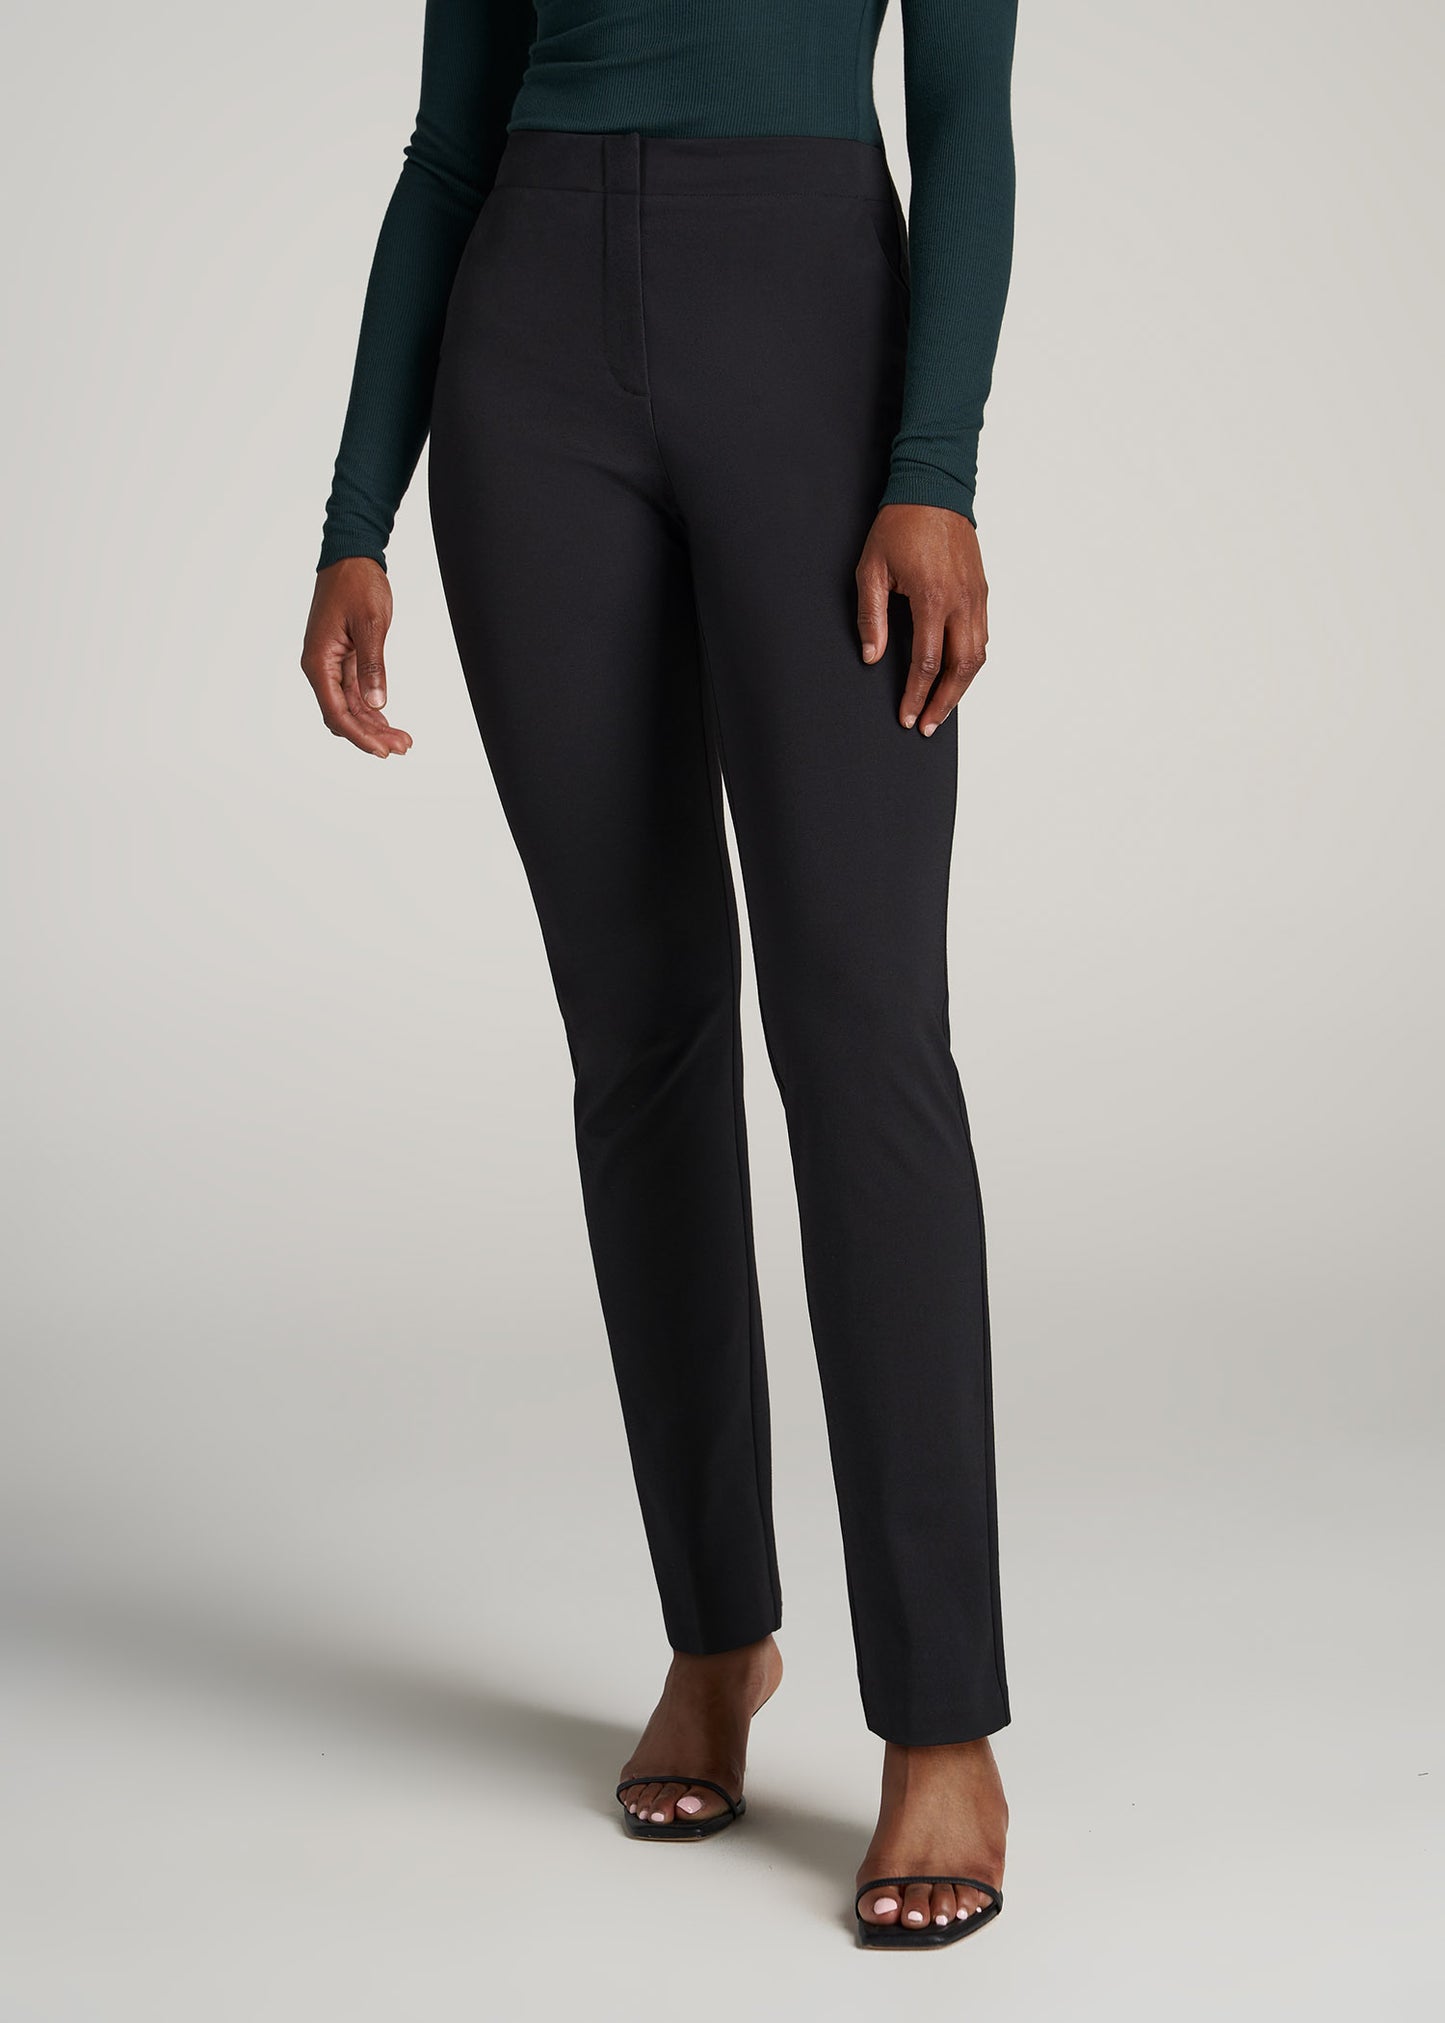     American-Tall-Women-Slim-Fit-Dress-Pant-Black-front